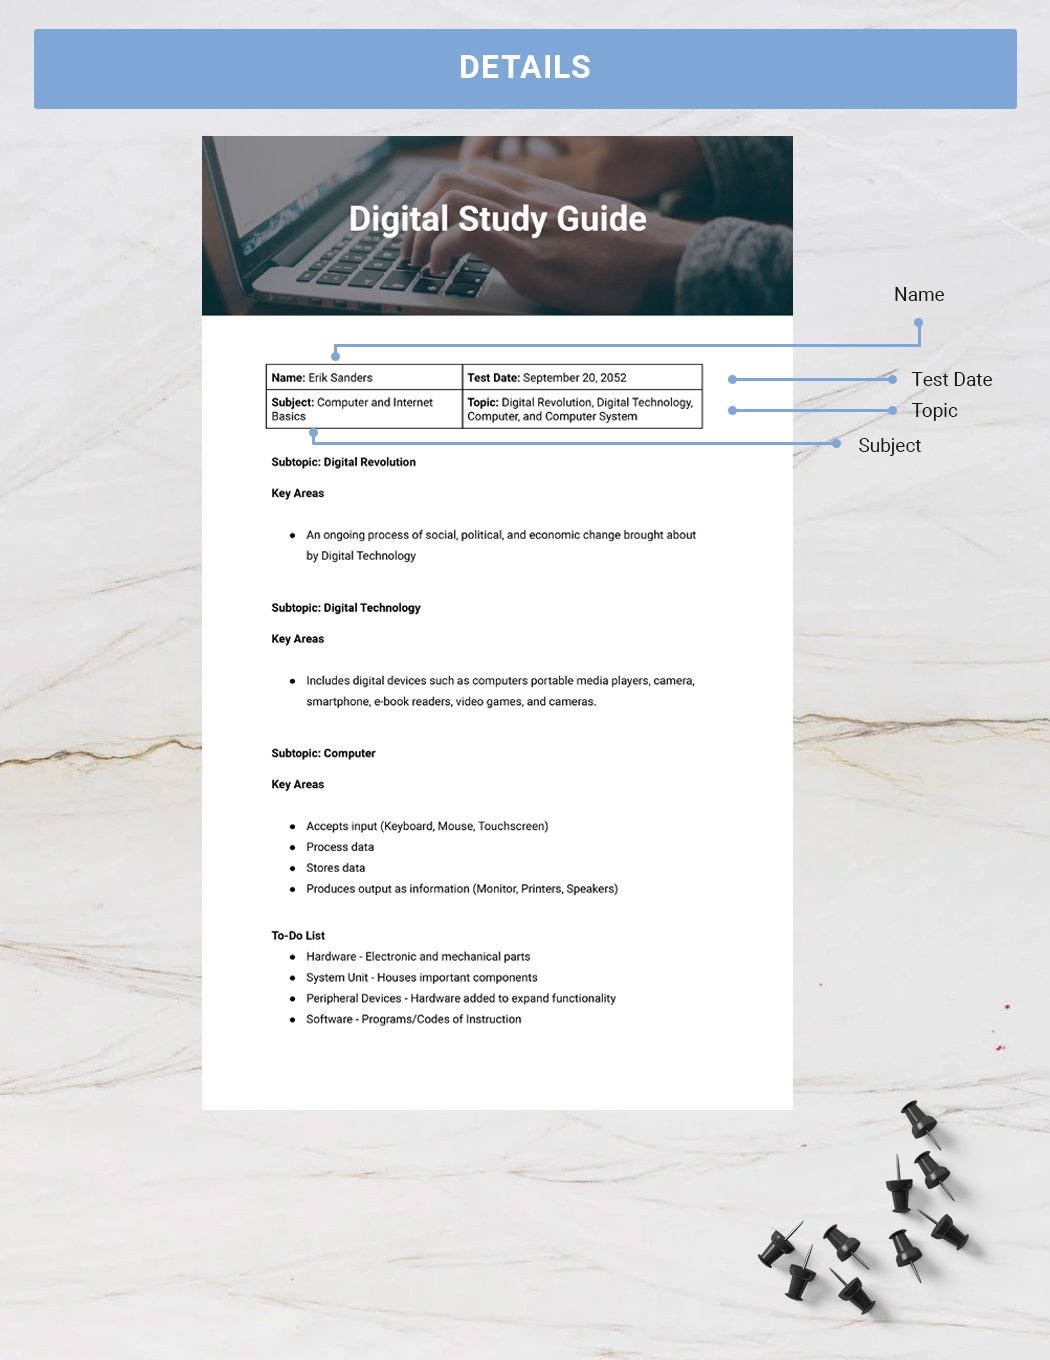 Digital Study Guide Template